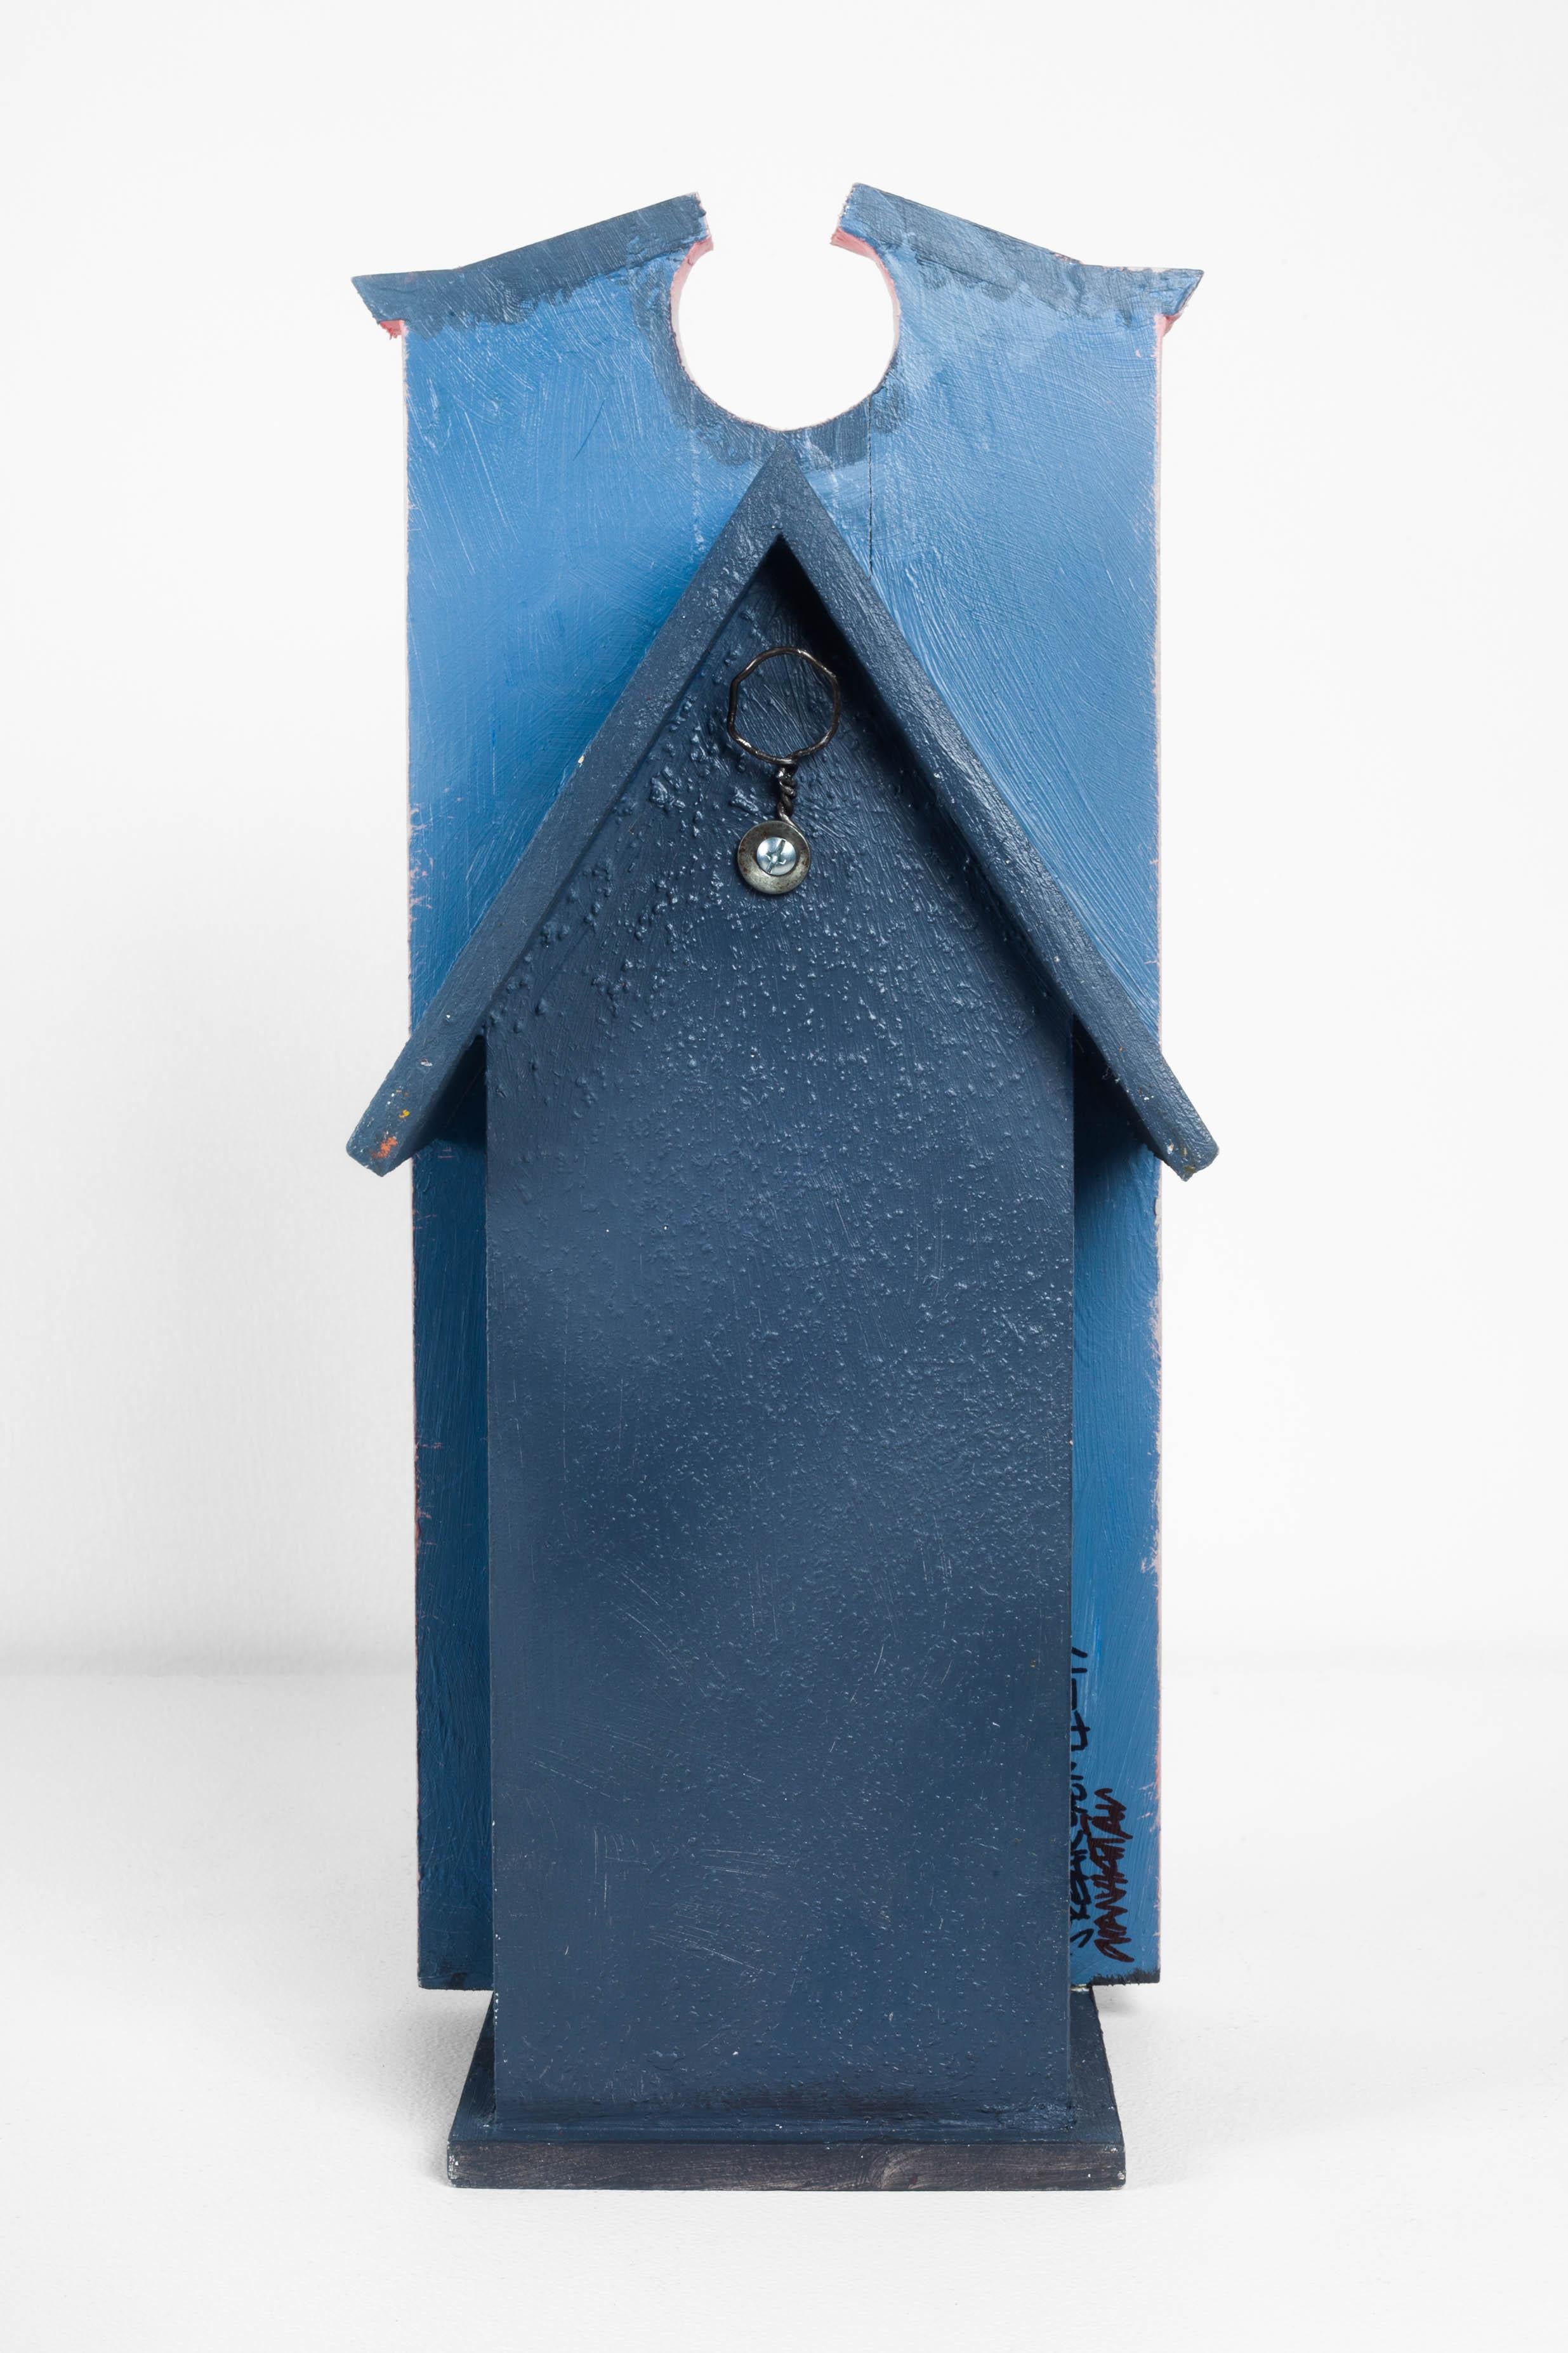 Wood The Manhattan birdhouse by Jason Sargenti, 2020 USA For Sale